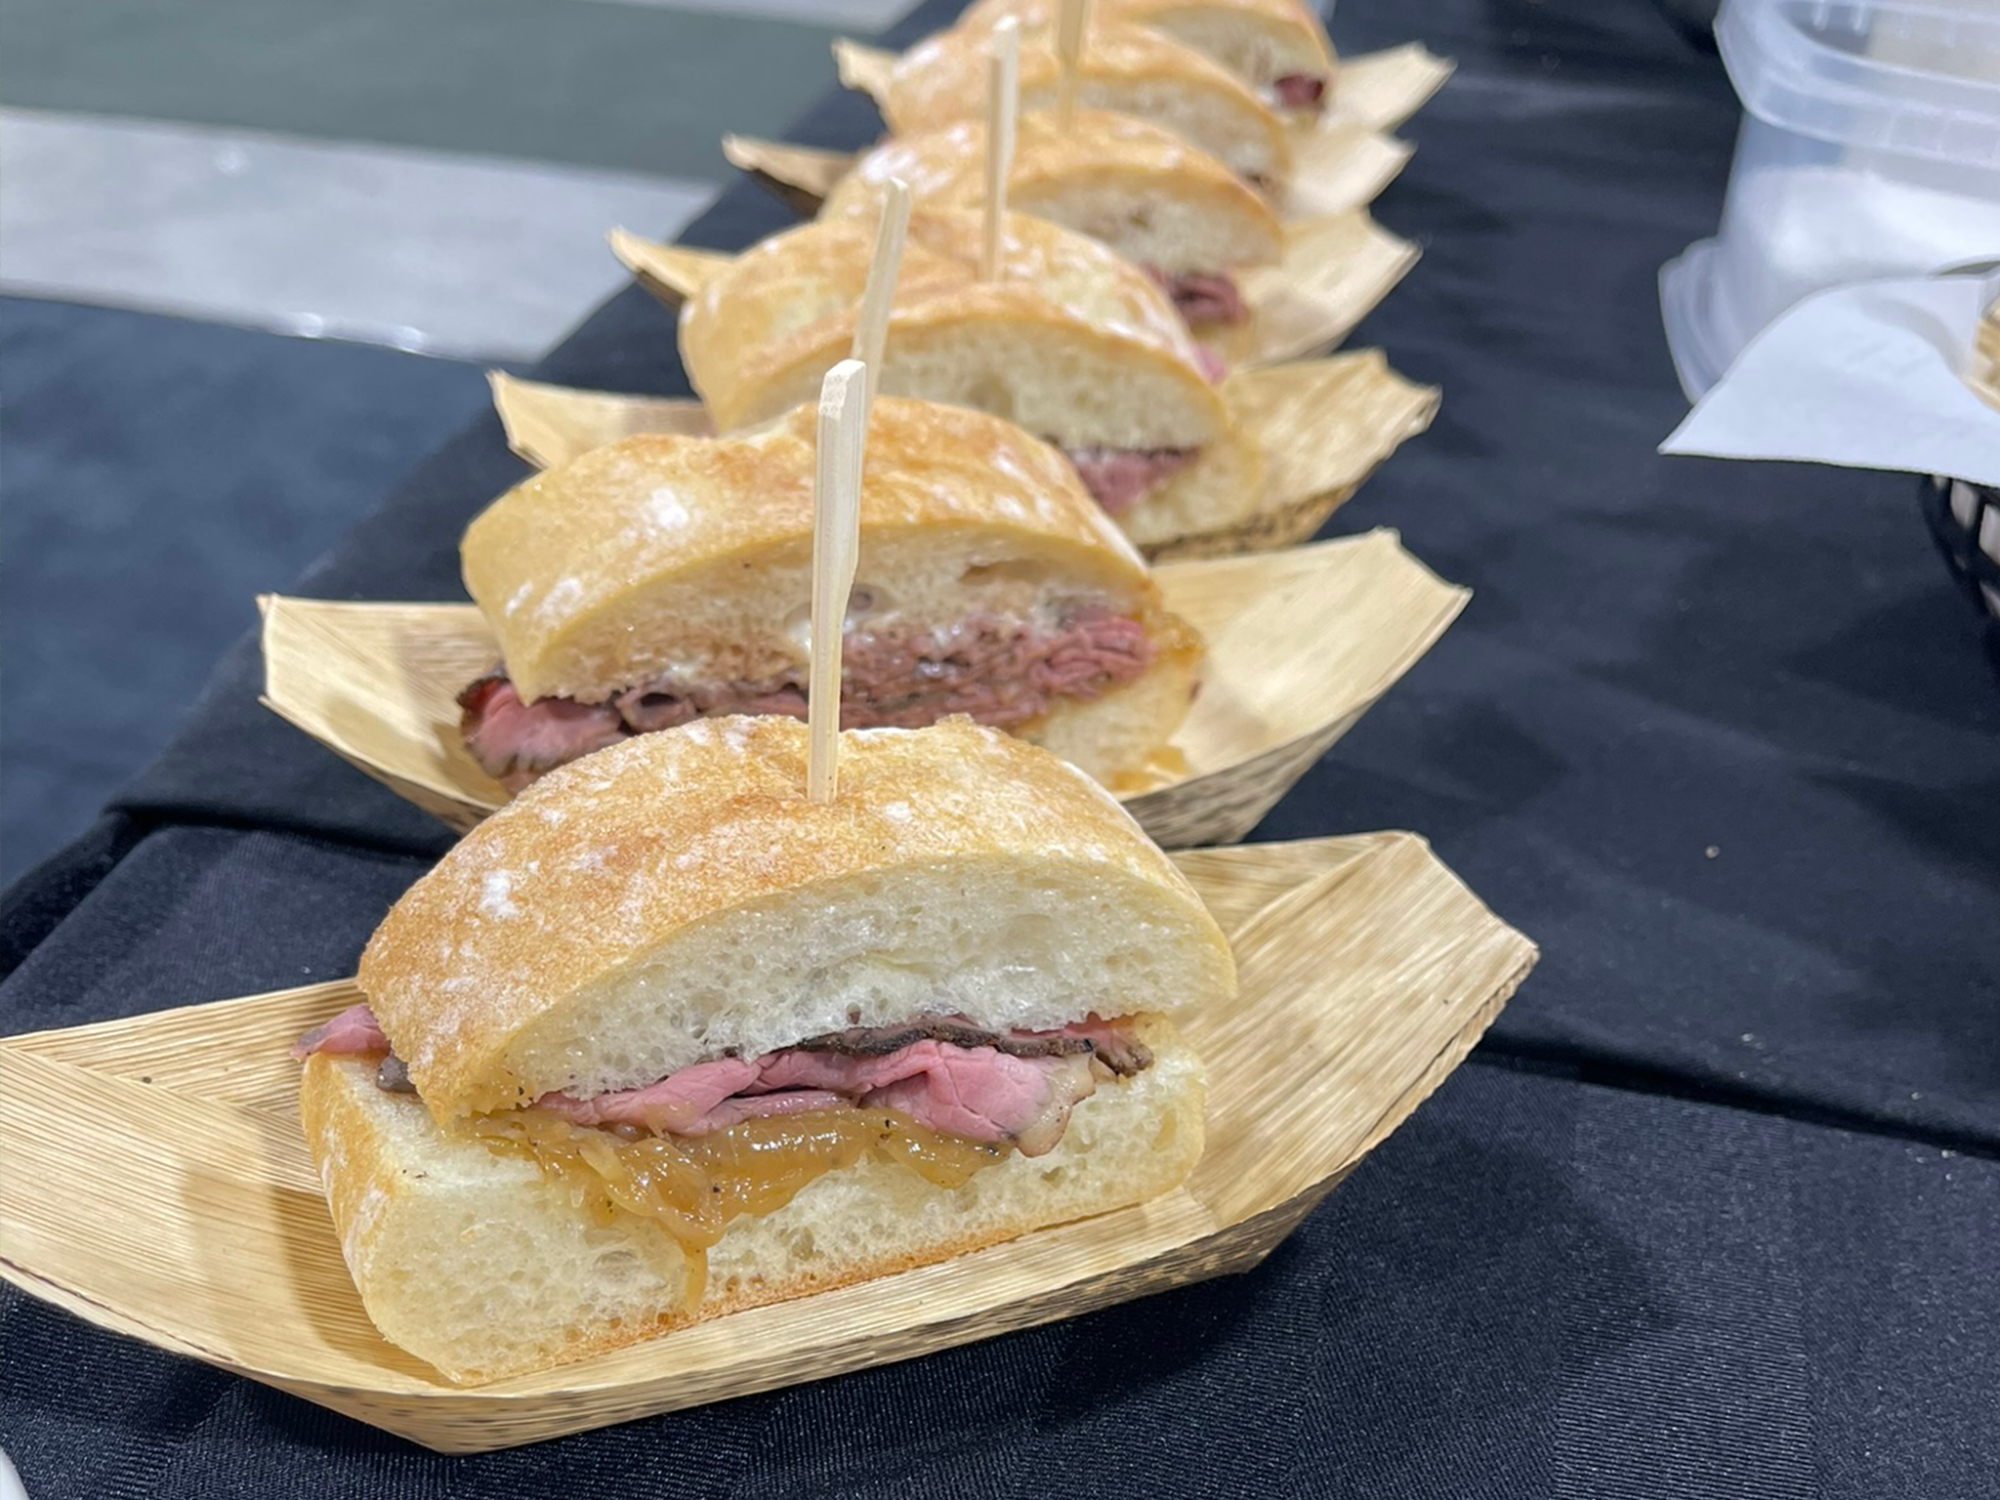 Carve Premium Ontario Beef Inside Round on a sandwich